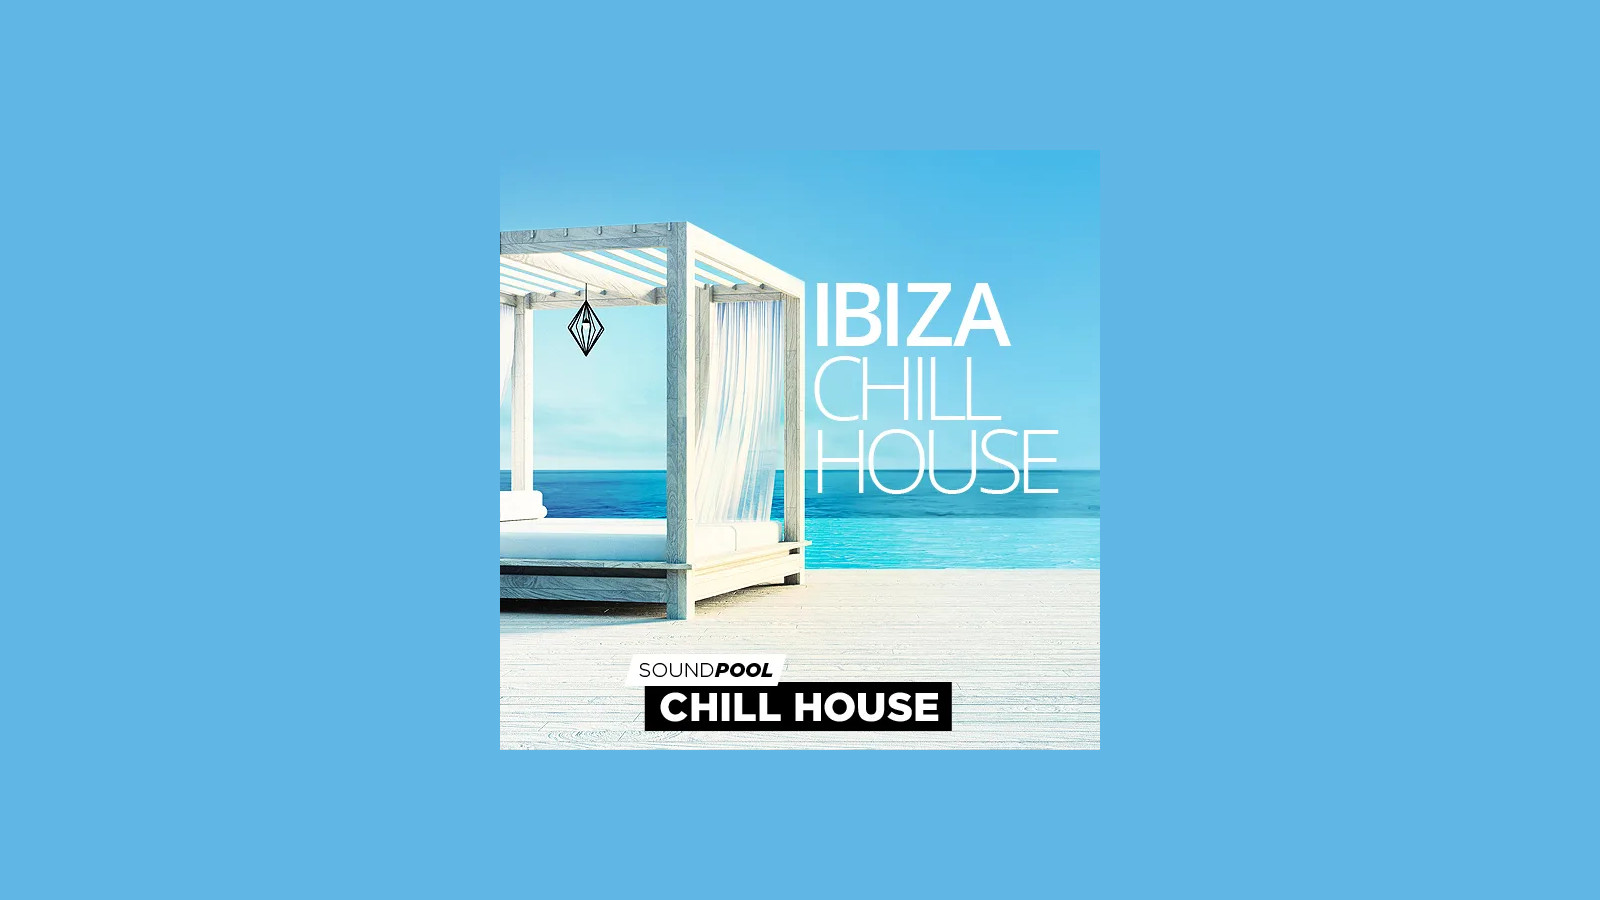 MAGIX Soundpool Ibiza Chill House ProducerPlanet CD Key 5.65 usd